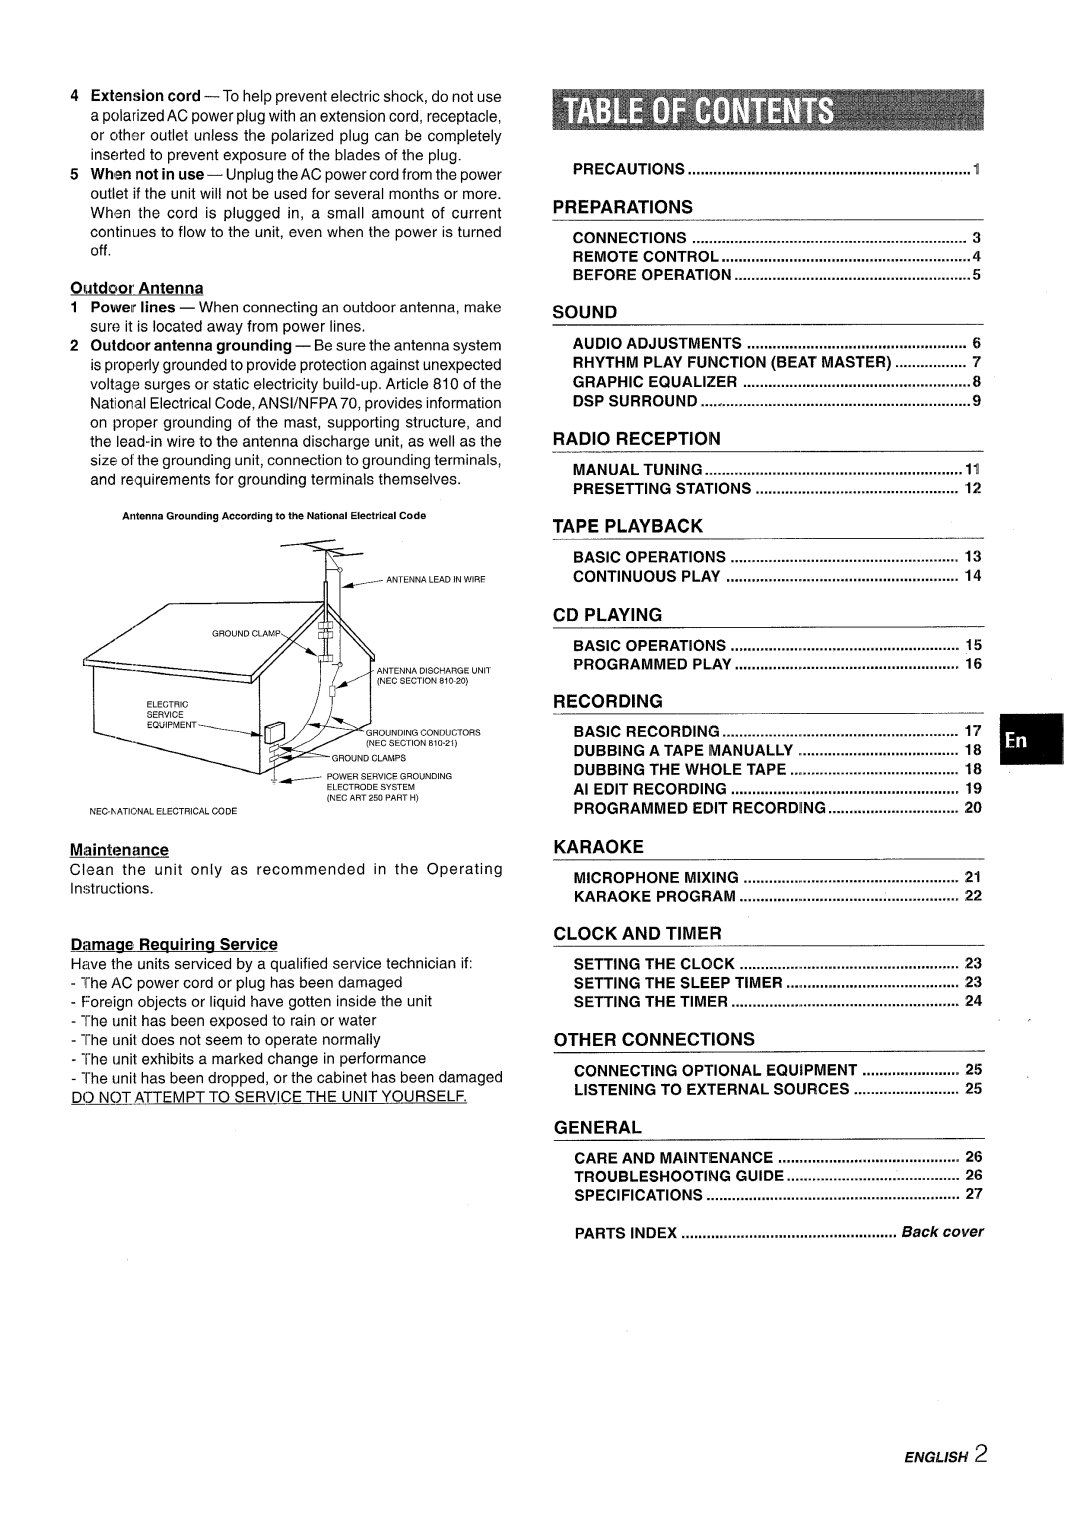 Sony NSX-A707 manual Back cower, English, “-=? 